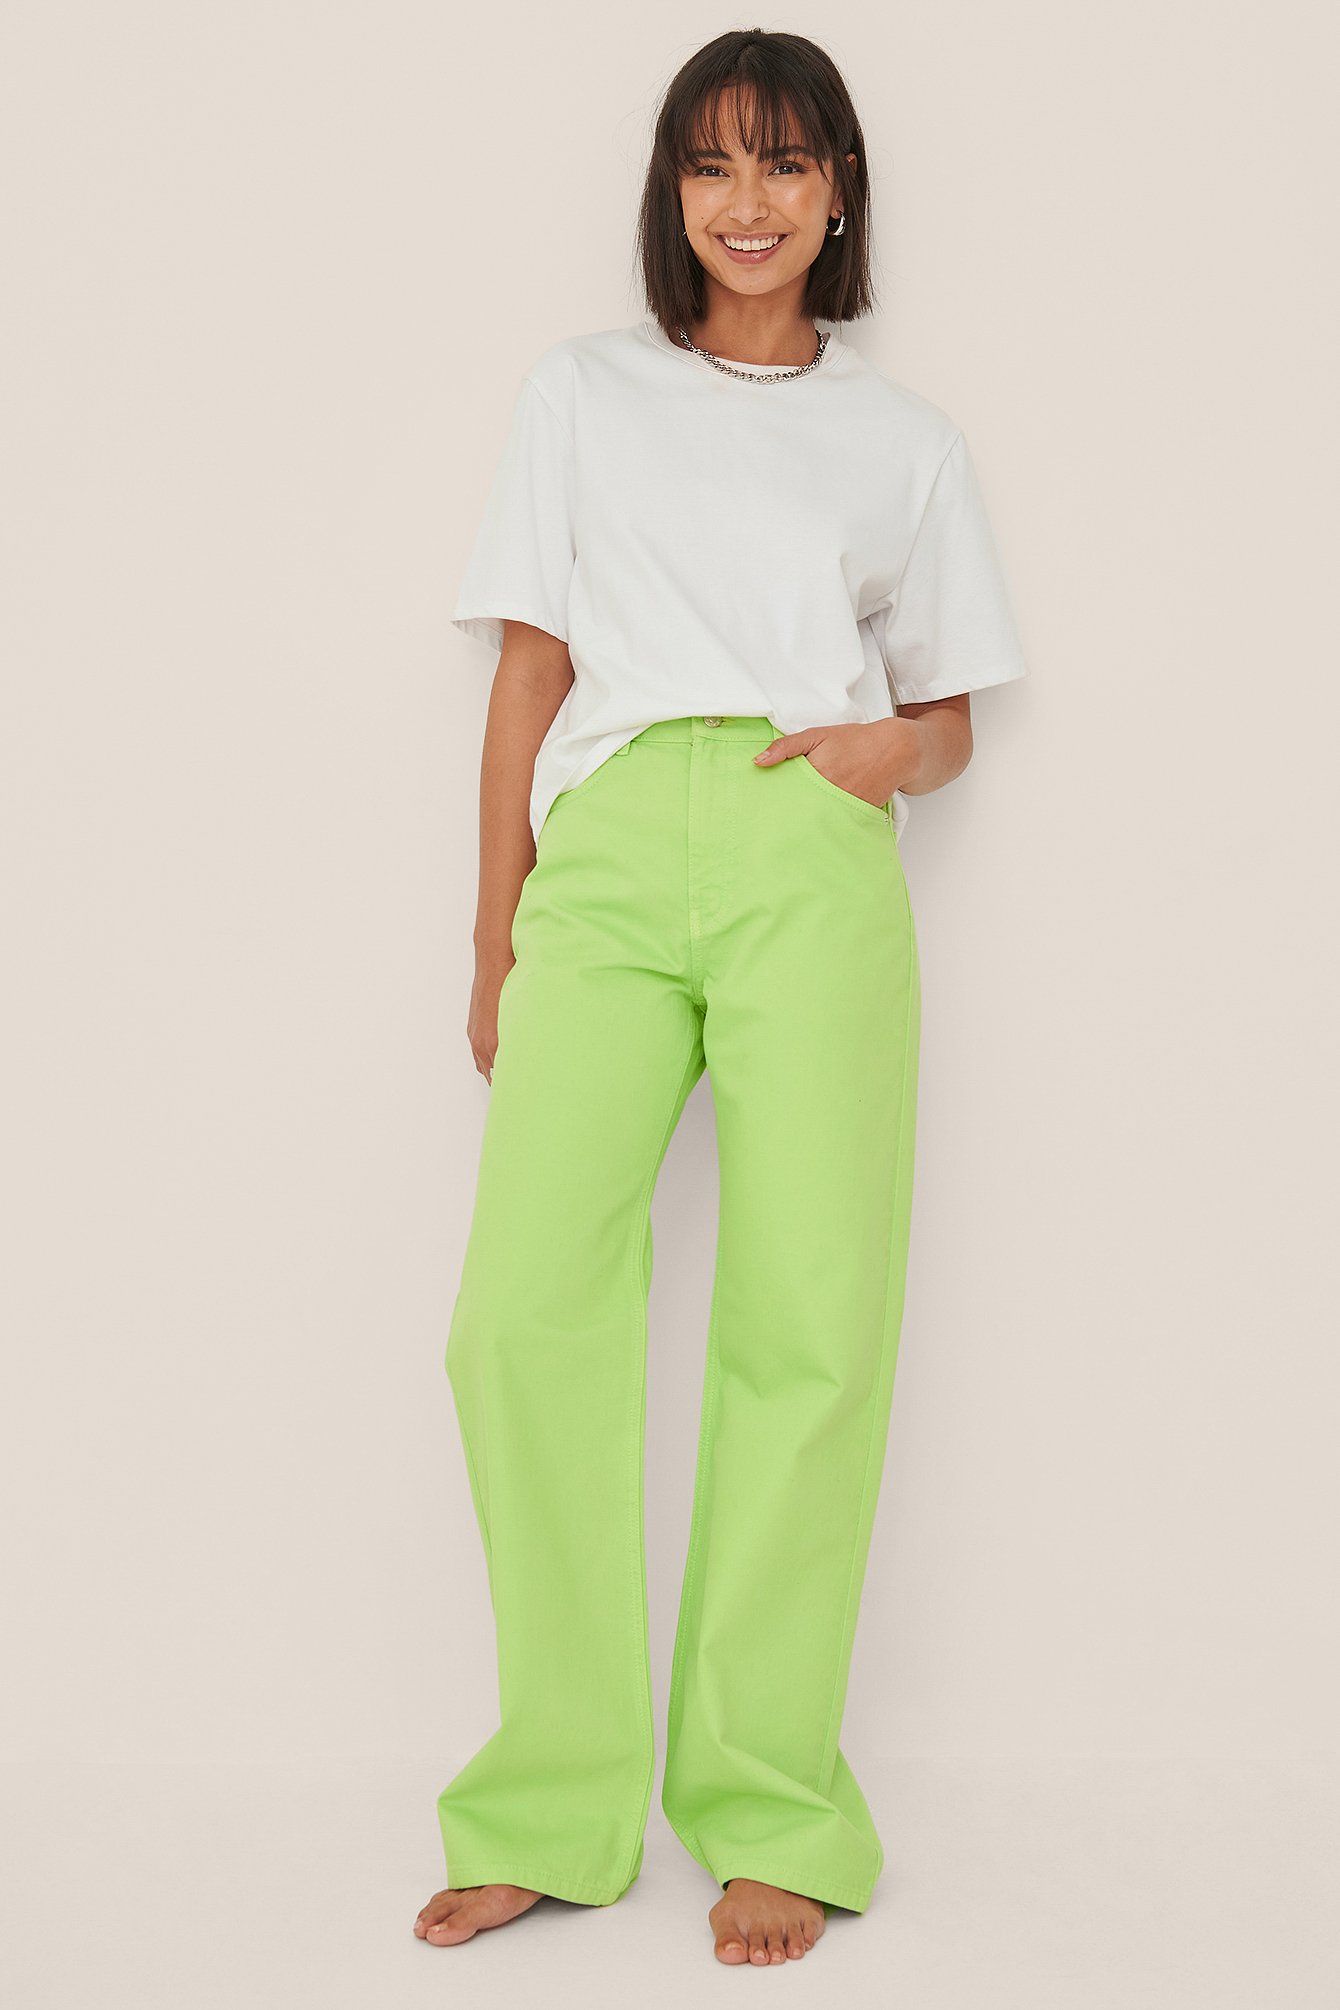 Green Relaxed Full Length Jeans